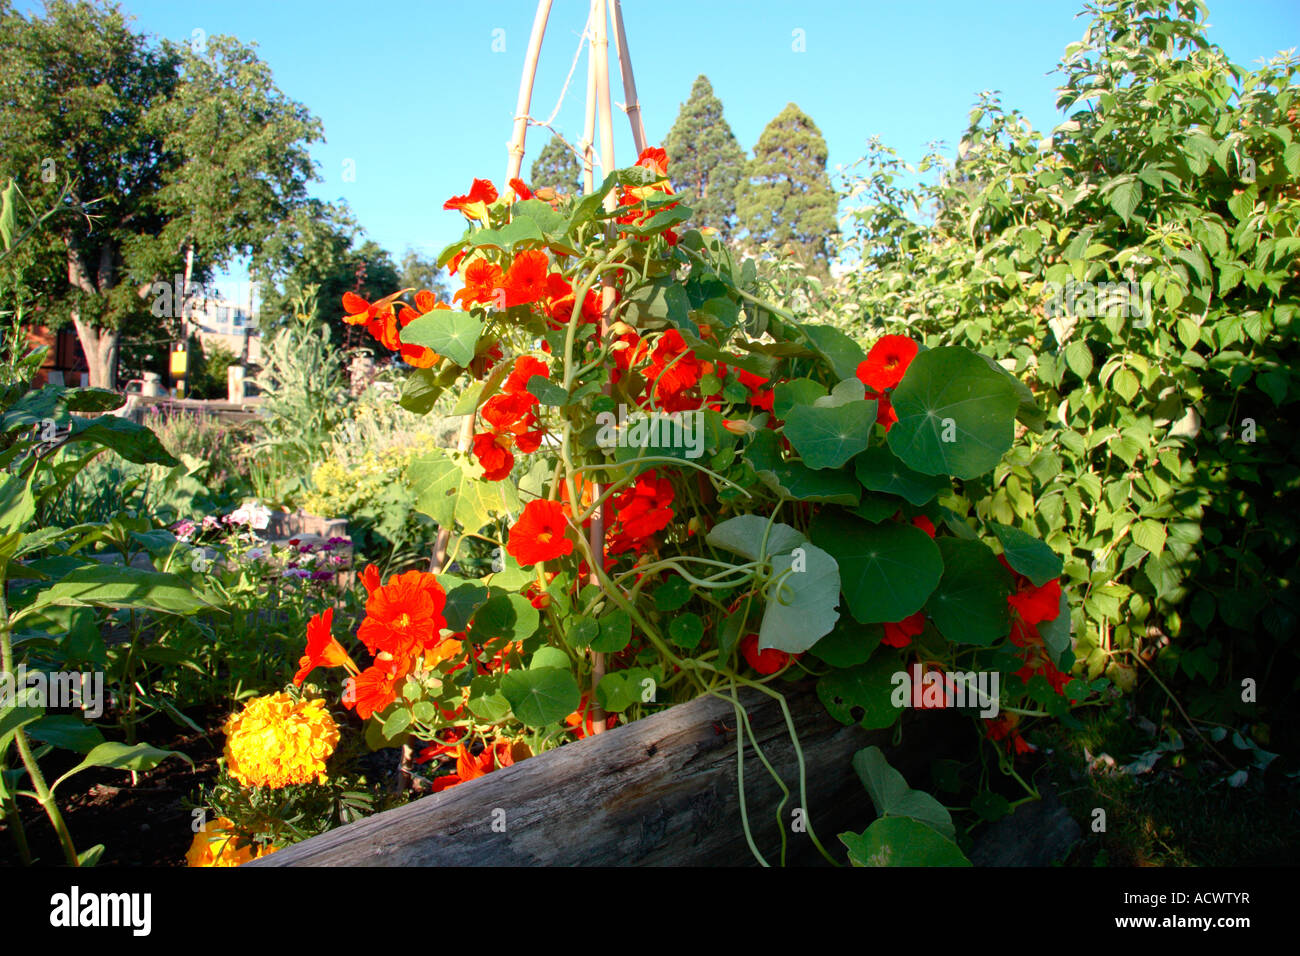 Squash plant community garden Stock Photo